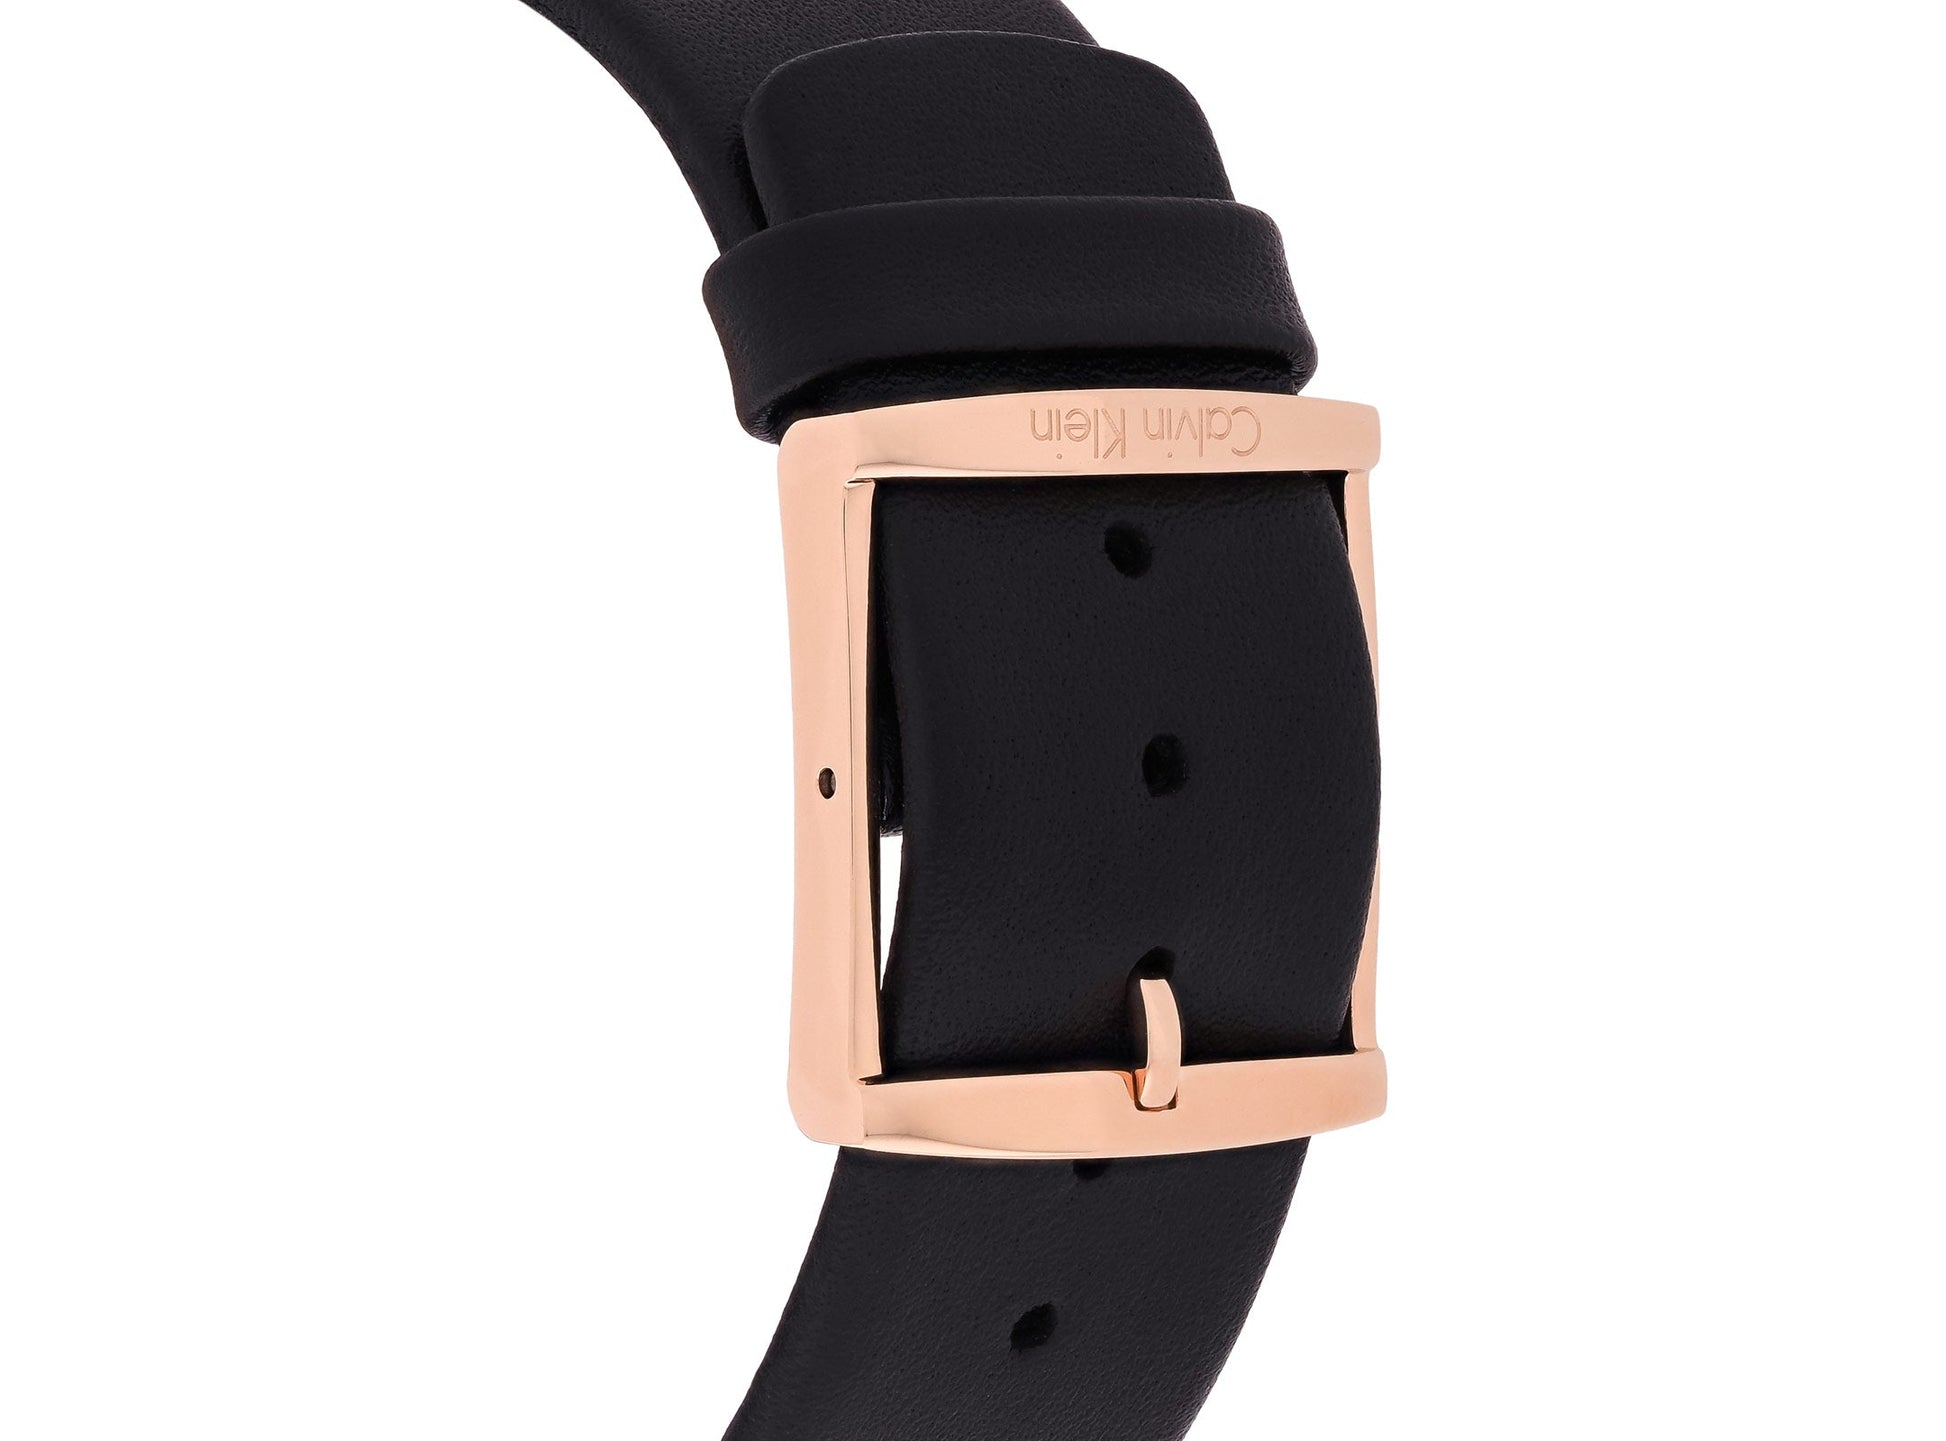 Calvin Klein City Quartz Black Dial Black Leather Strap Watch for Men - K2G2G6CZ